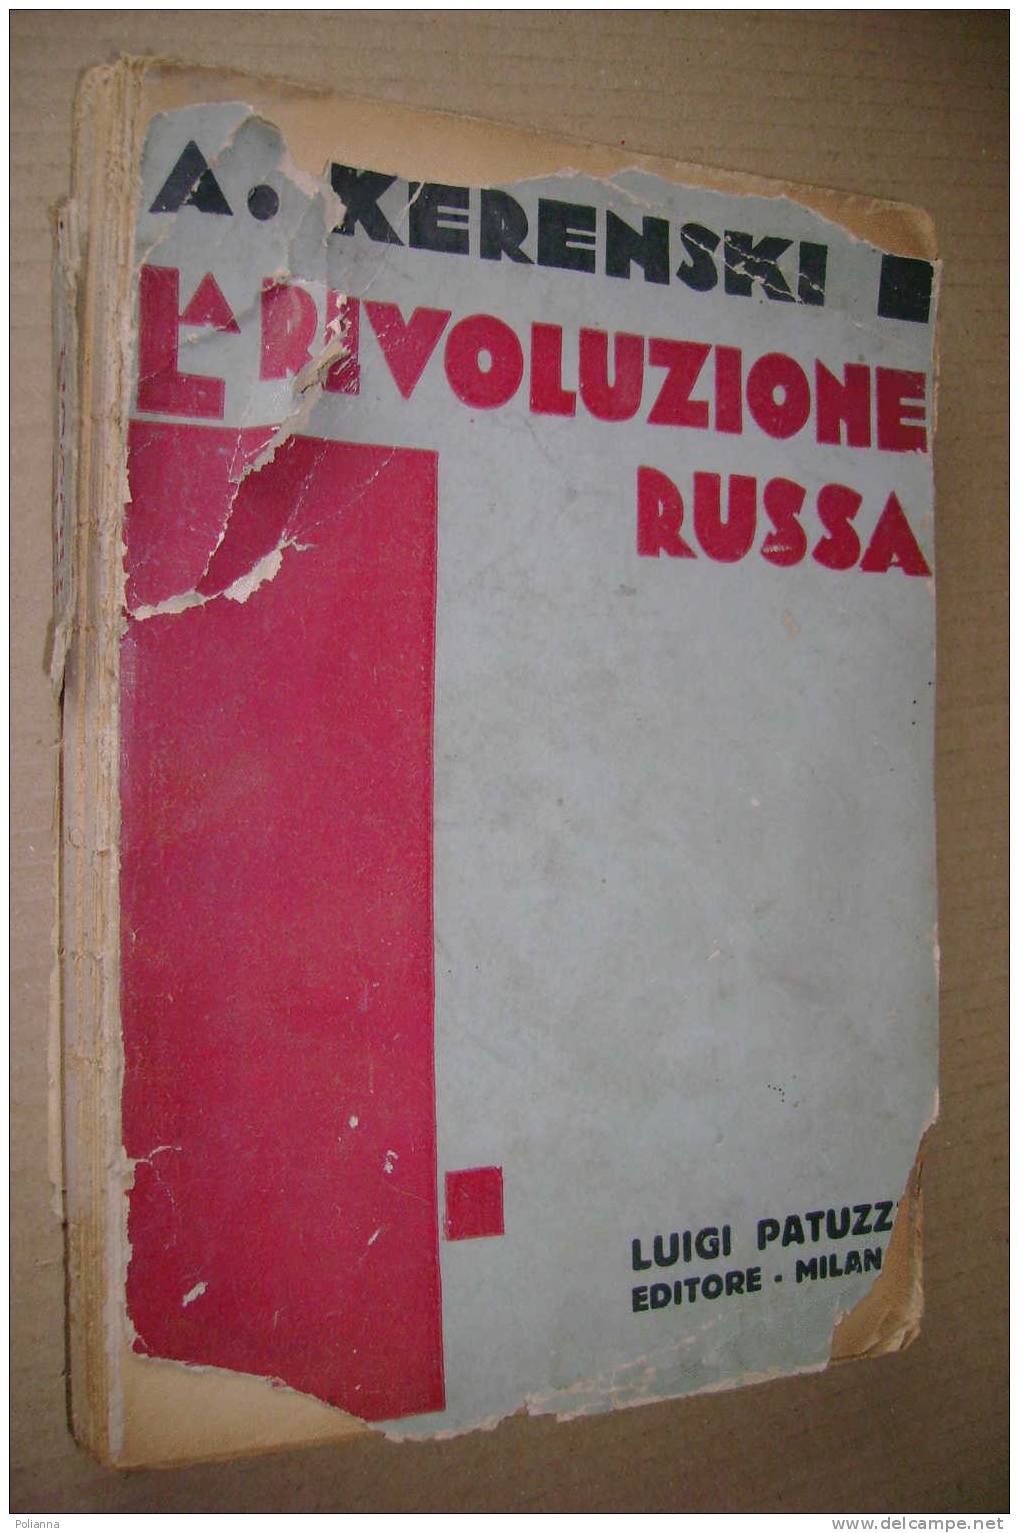 PDJ/20 Kerenski LA RIVOLUZIONE RUSSA Patuzzi 1932 - History, Biography, Philosophy